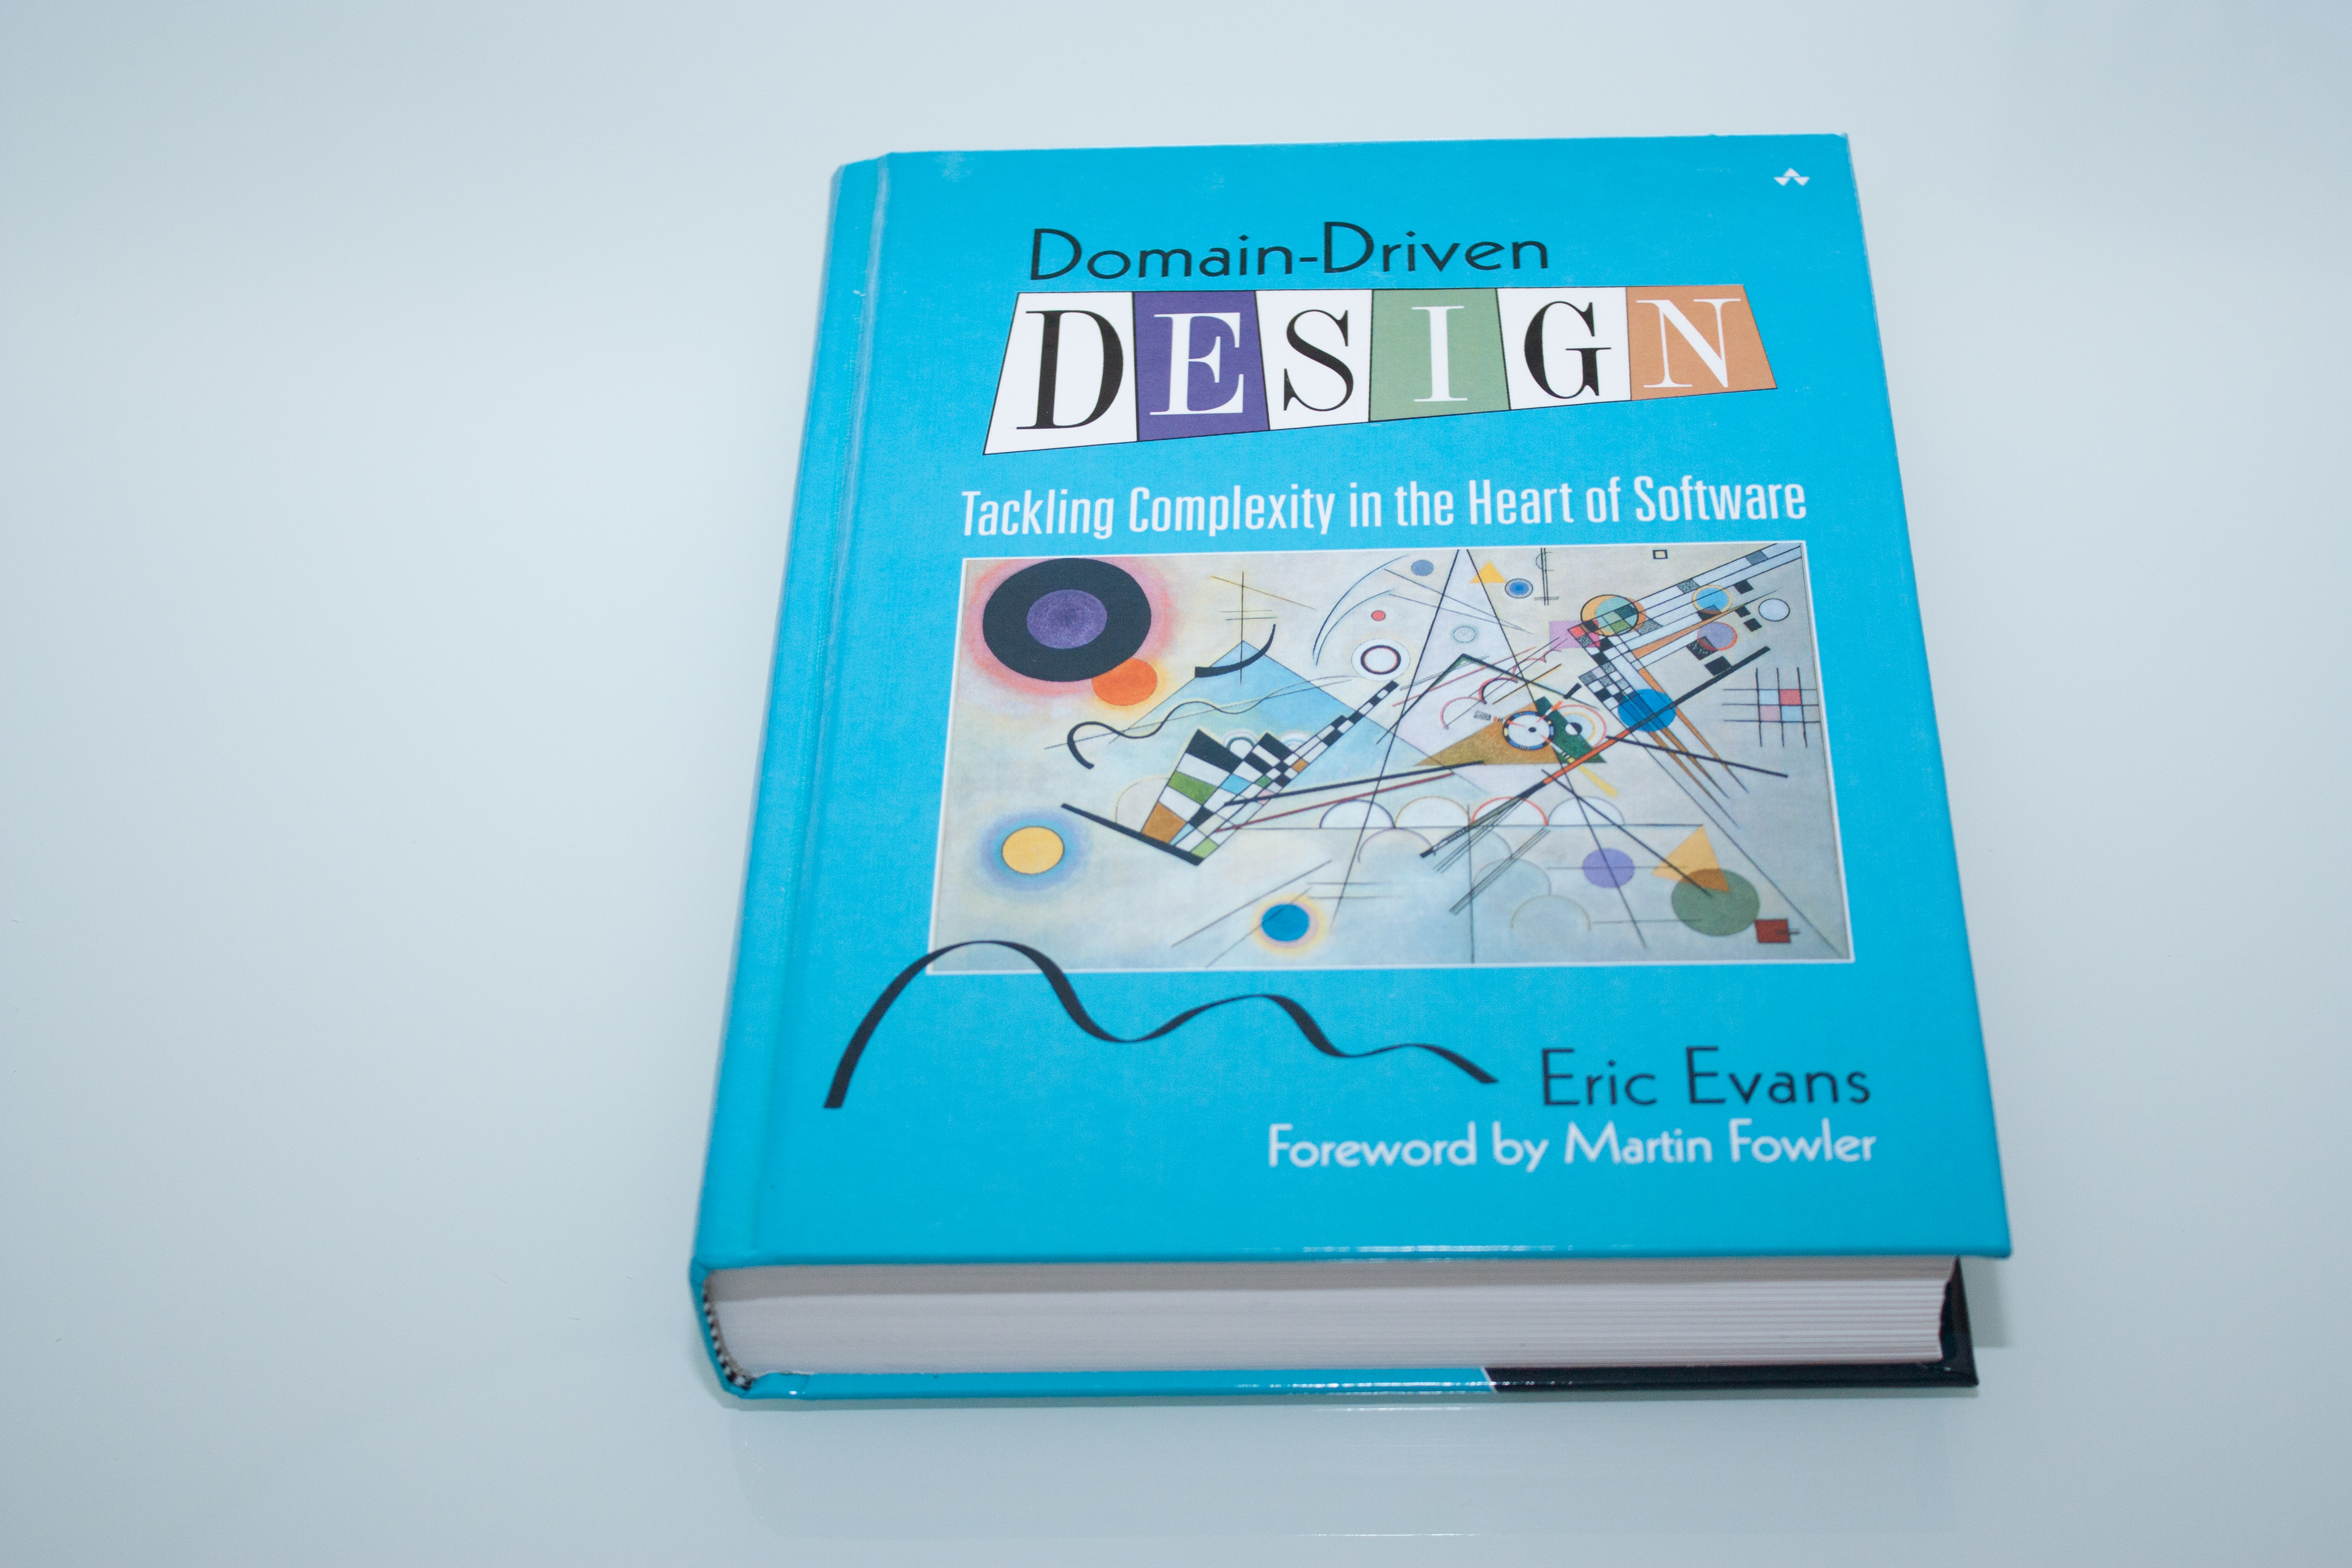 Domain-Driven Design by Eric Evans